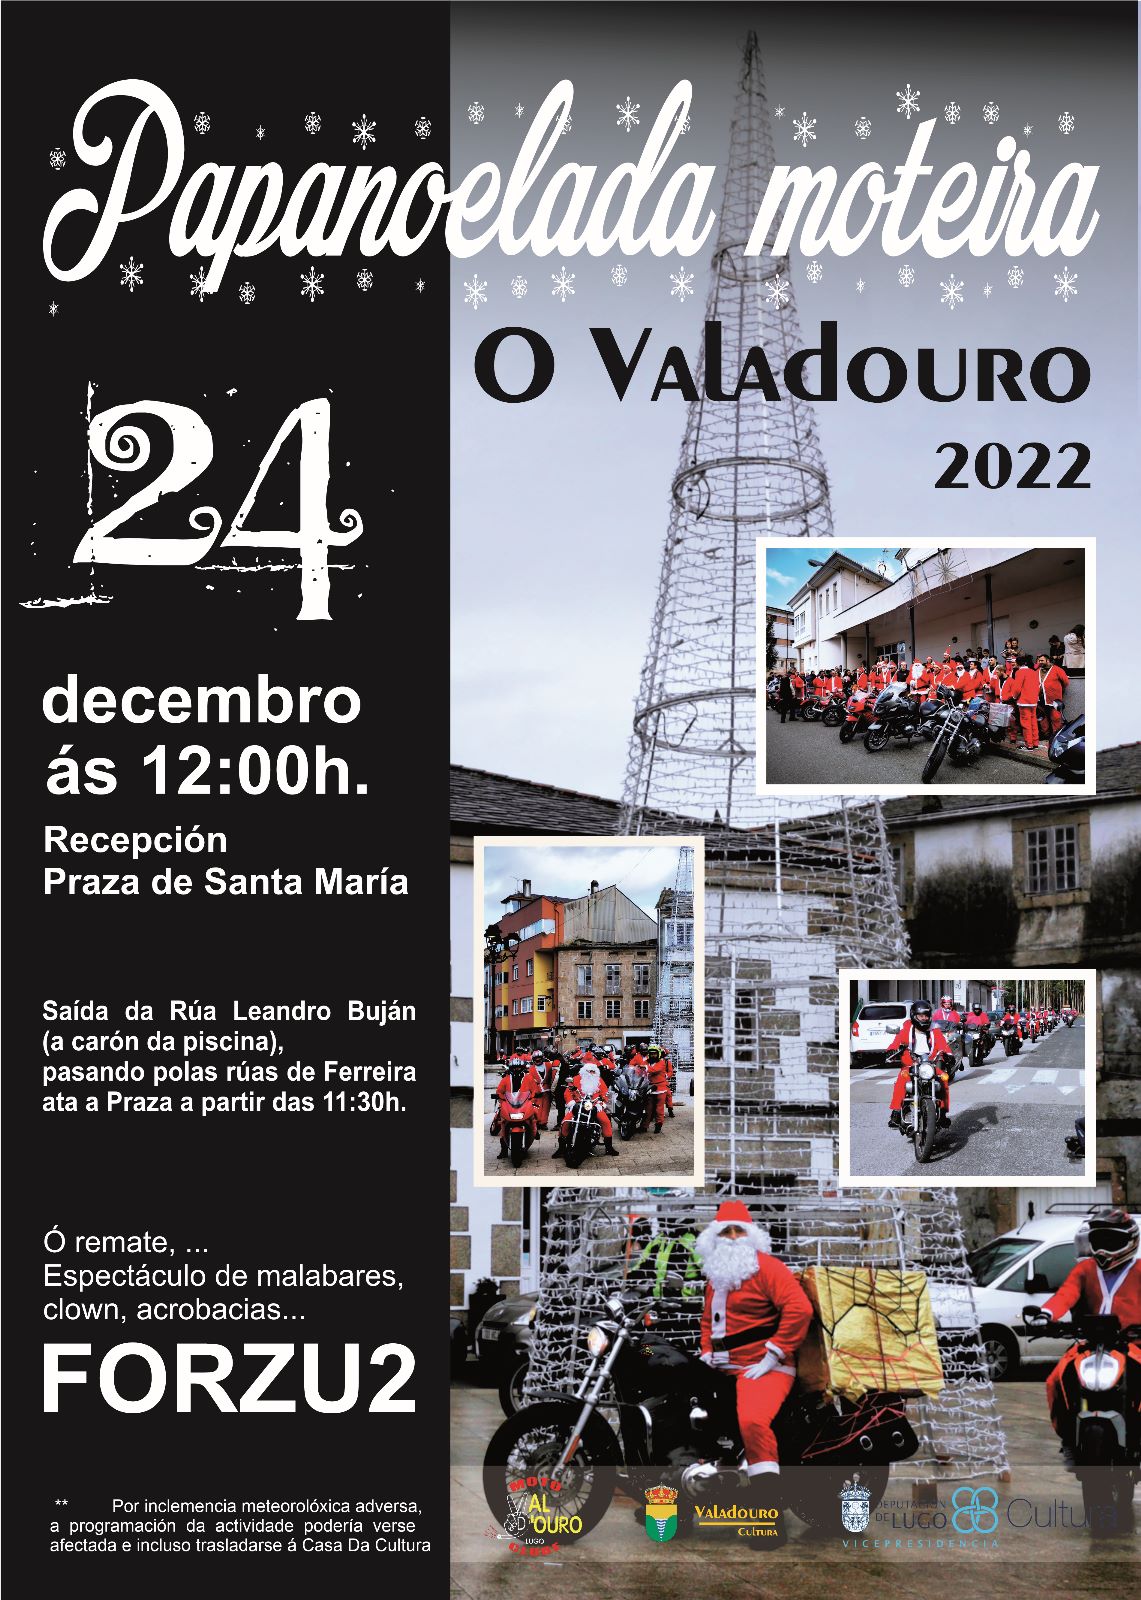 PAPANOELADA MOTEIRA O VALADOURO (LUGO). Organiza Motoclub VAL D'OURO